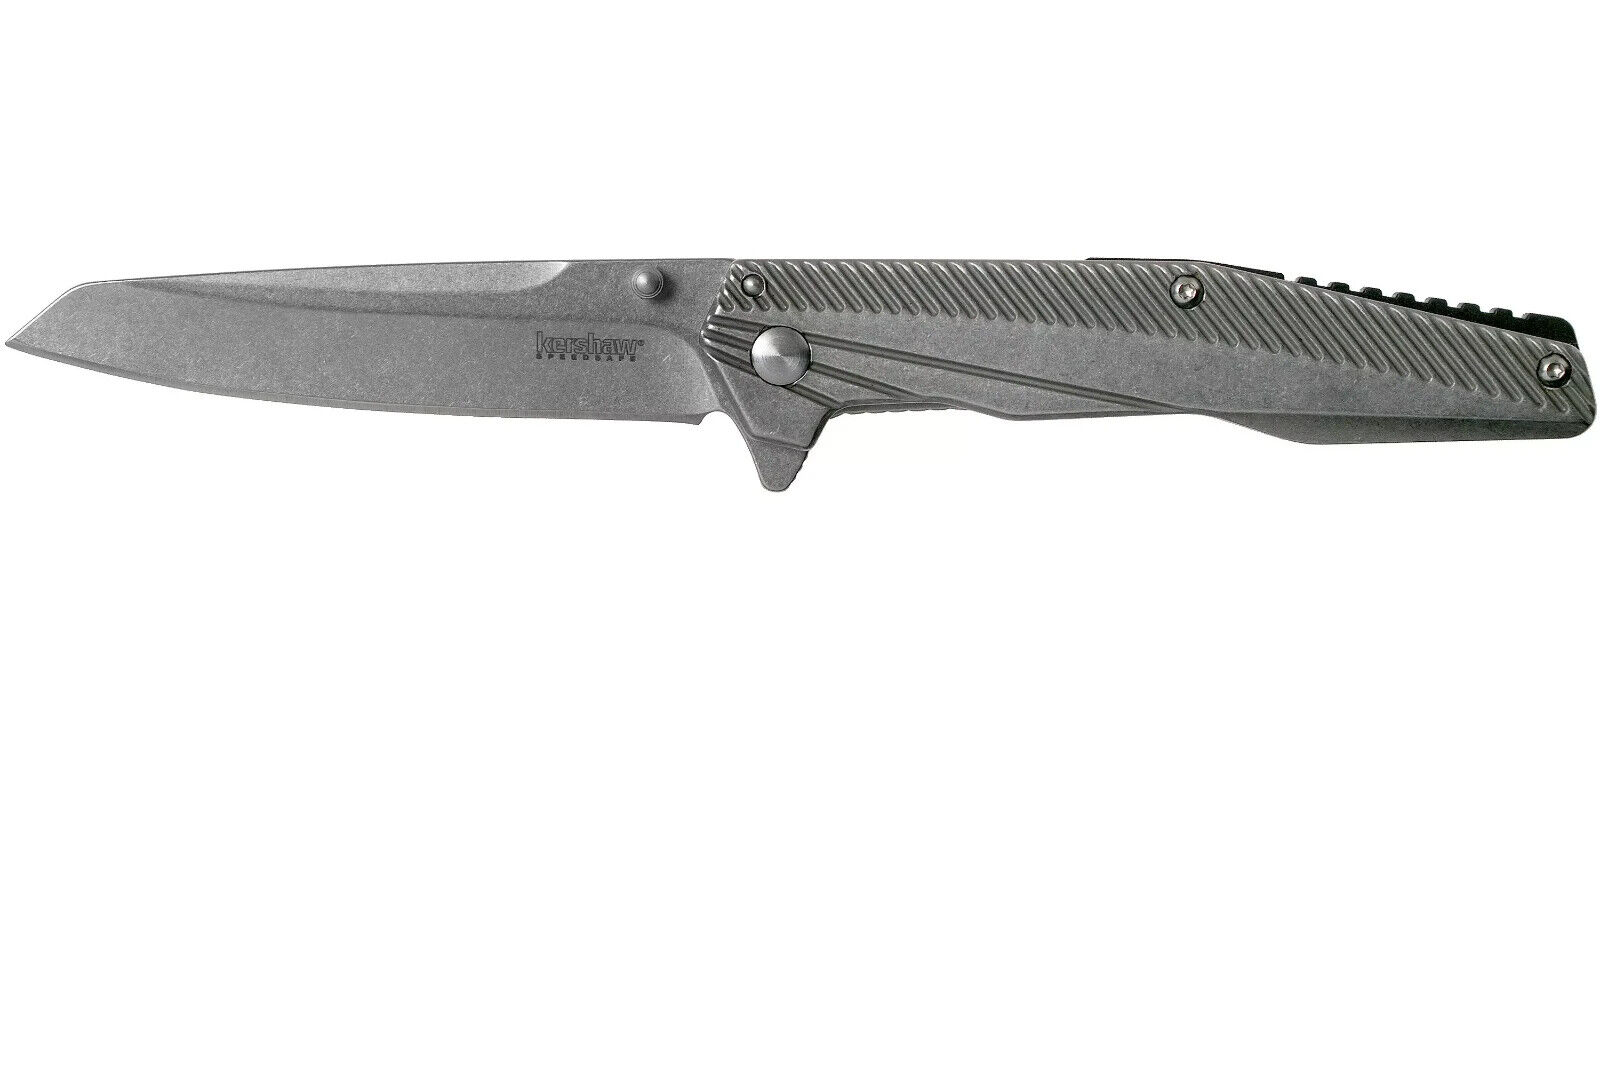 Kershaw 1368 Topknot Spring Assisted Flipper Folding Pocket Knife - rare model